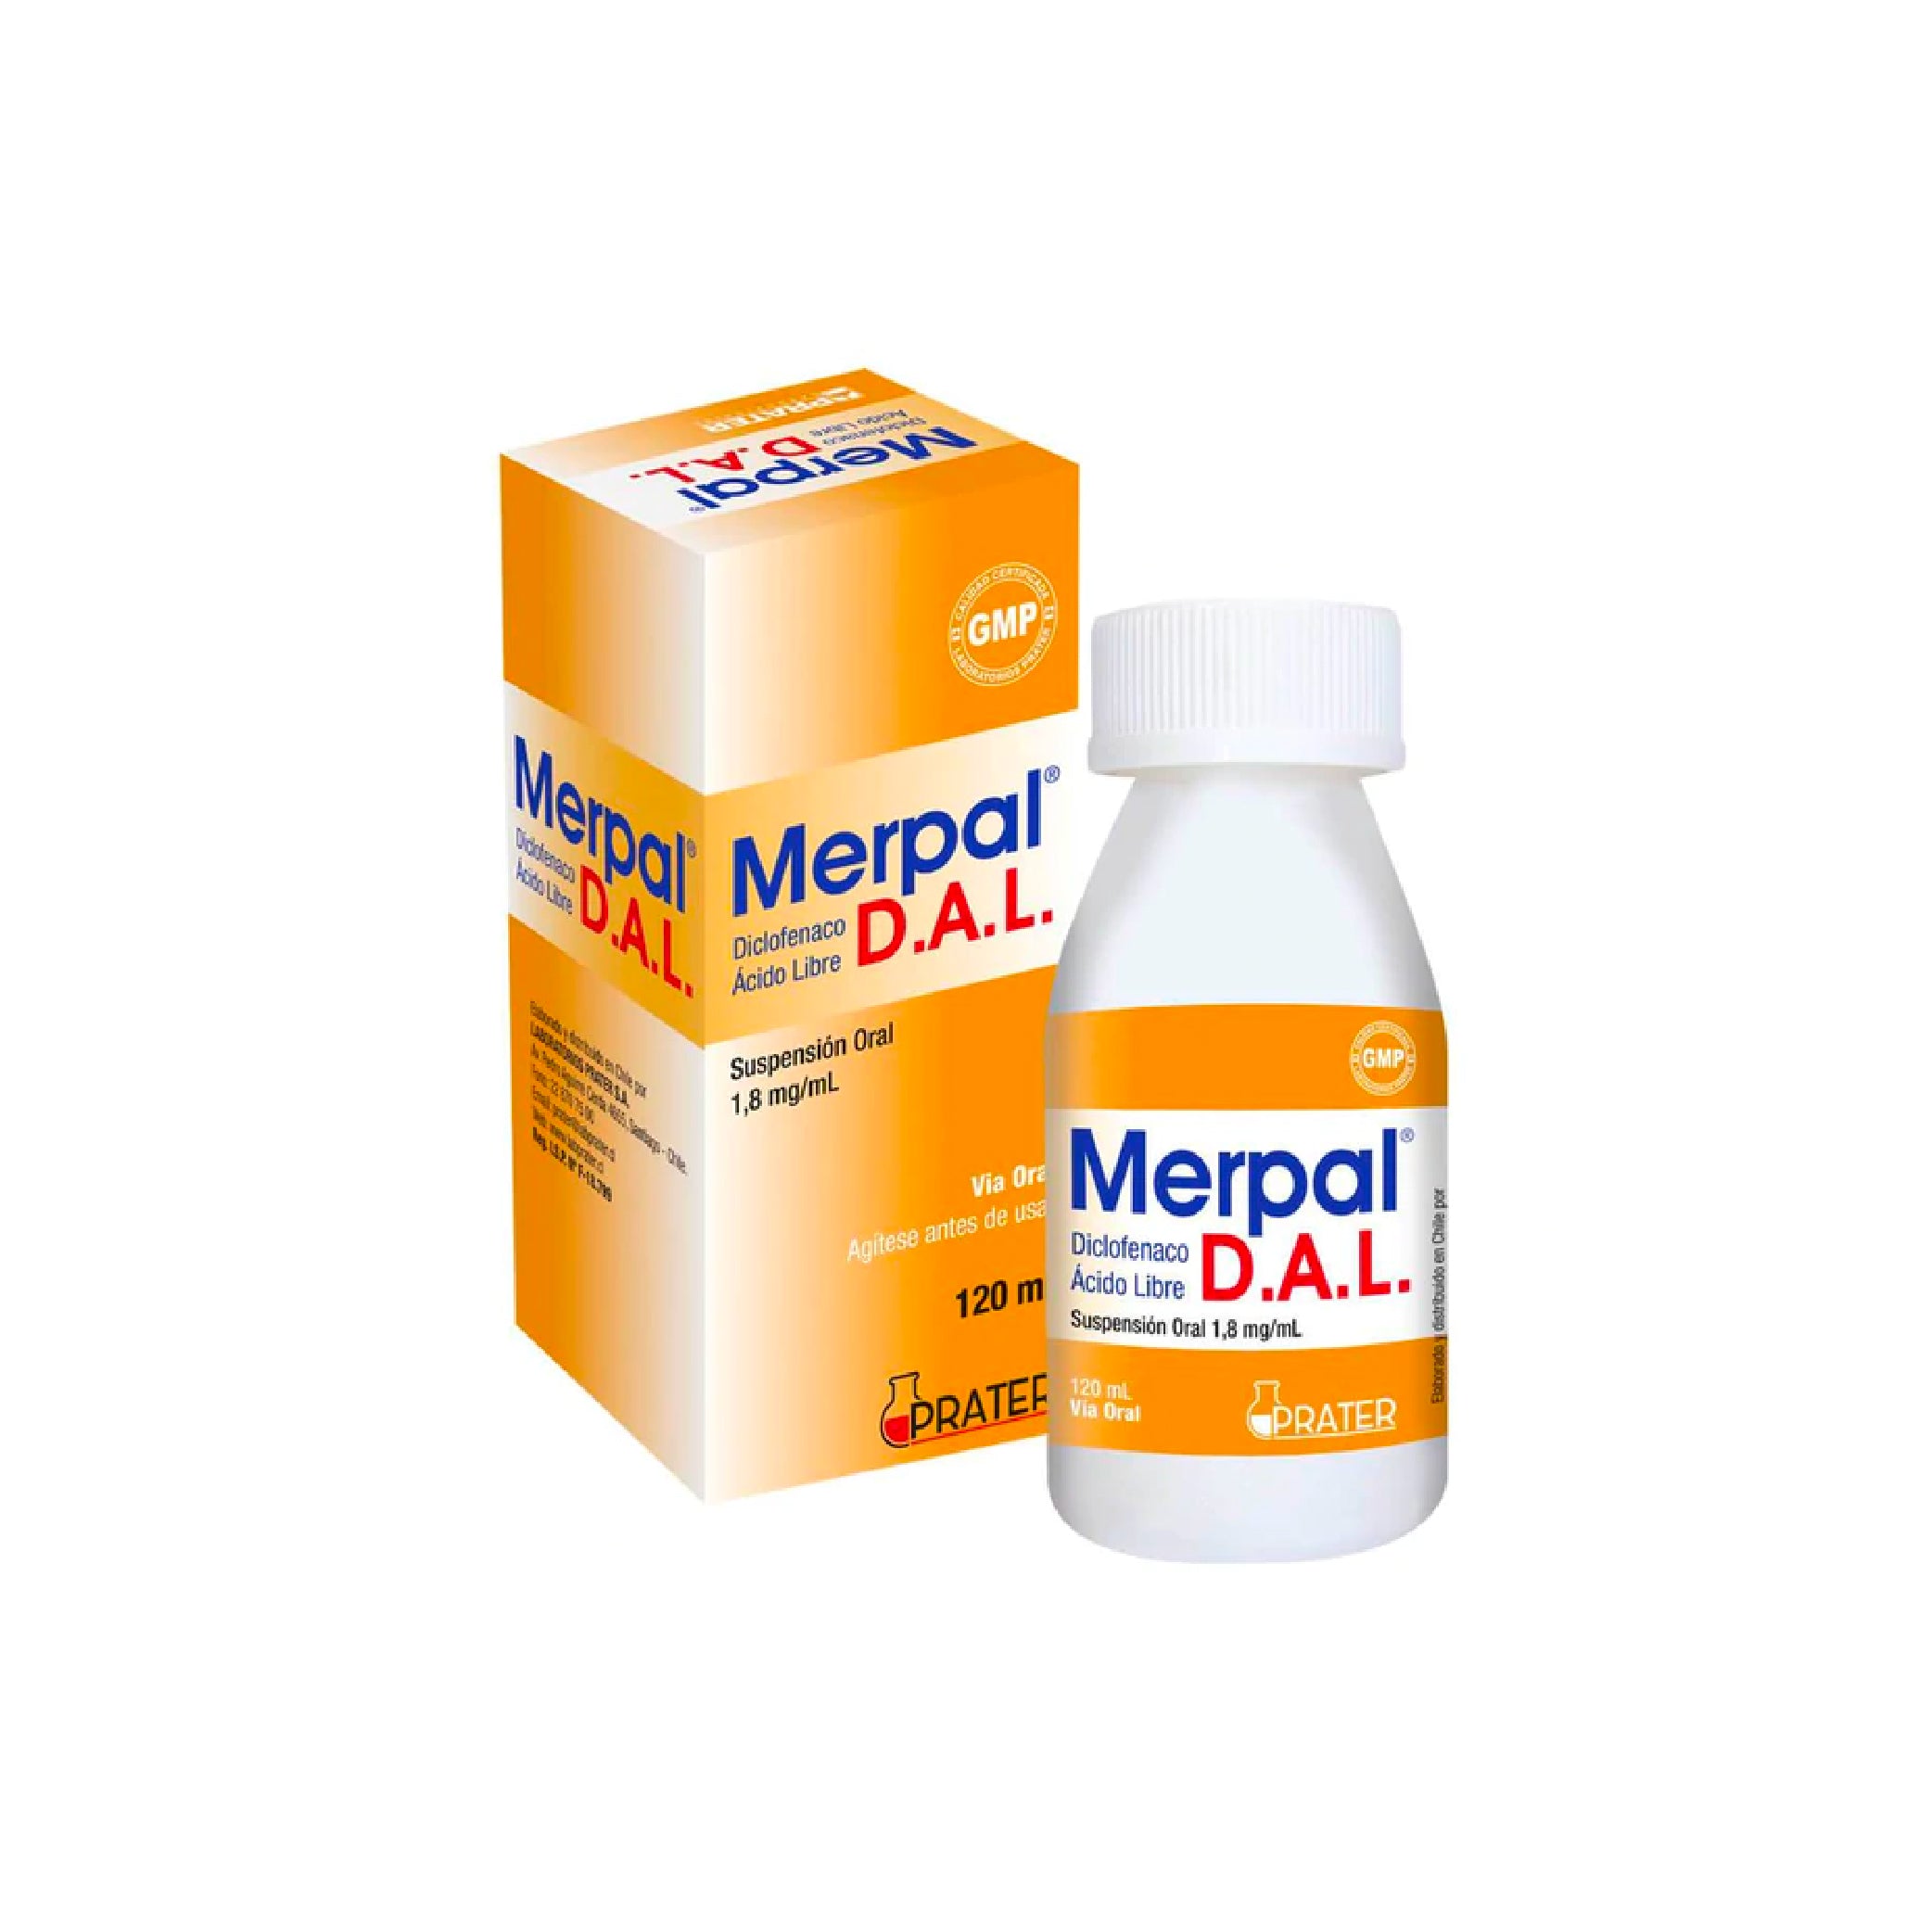 MERPAL DAL 1.8mg /ml Oral Susp. x 120ml